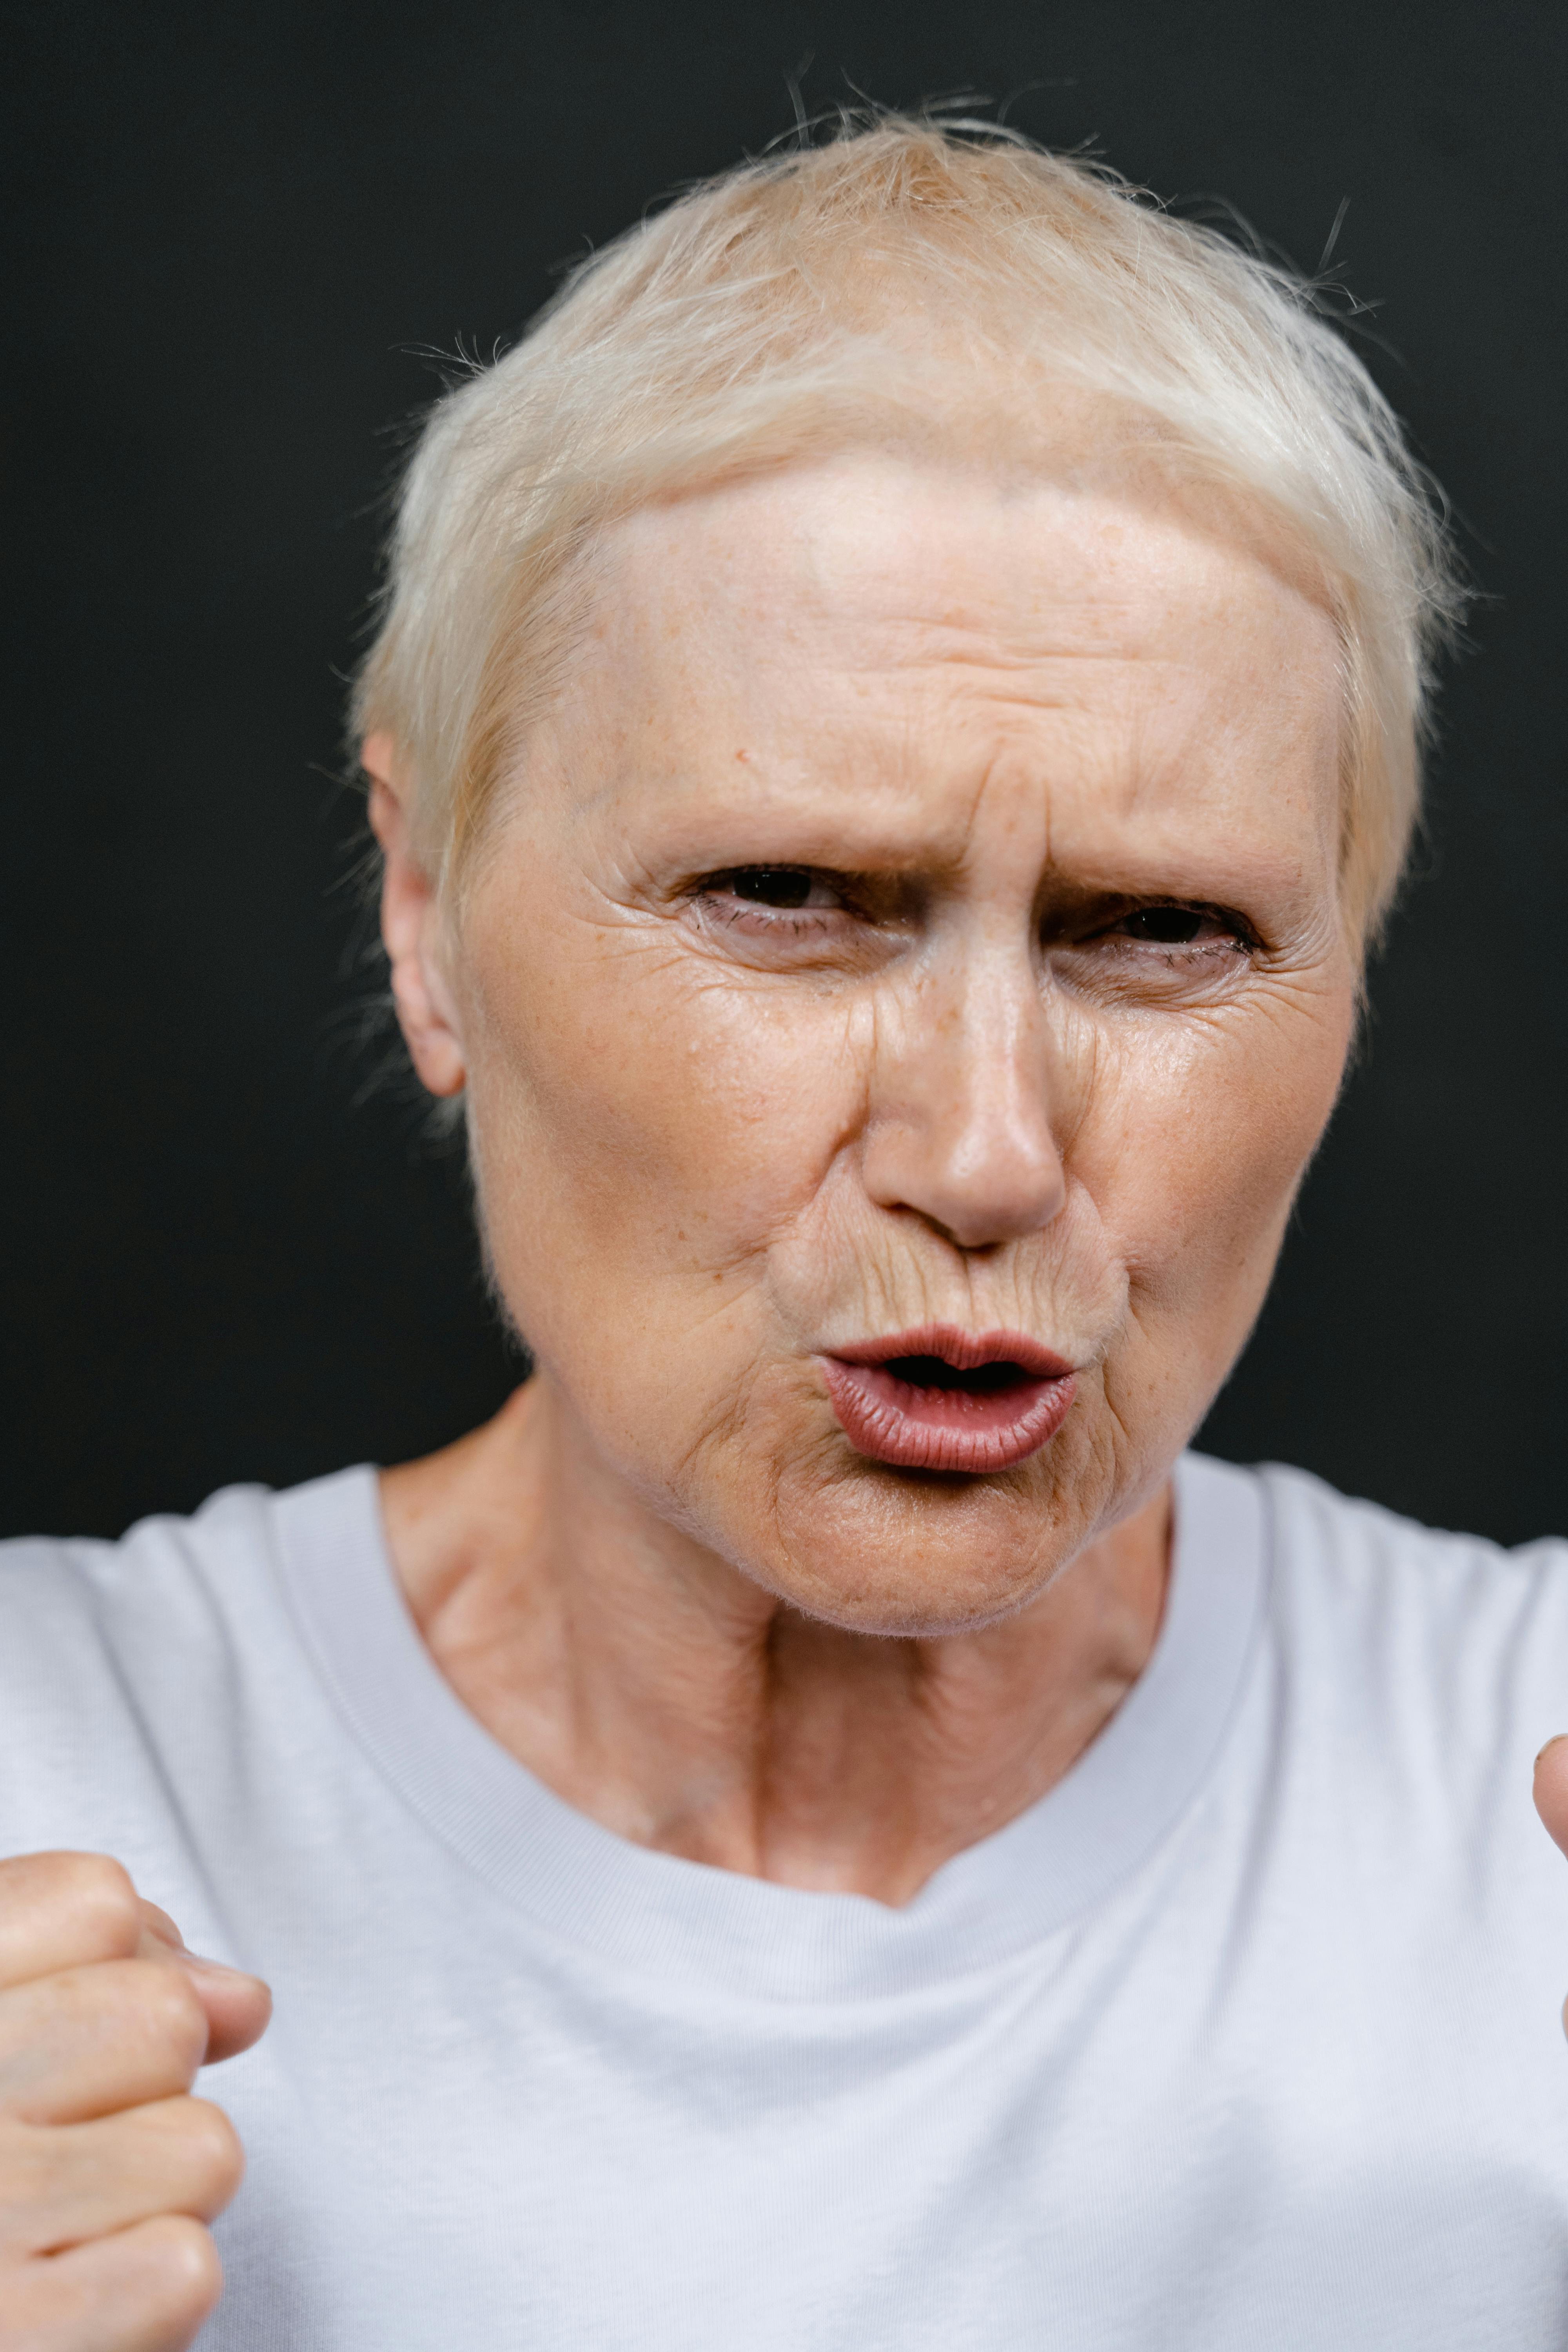 Eine verärgerte ältere Frau beschwert sich | Quelle: Pexels